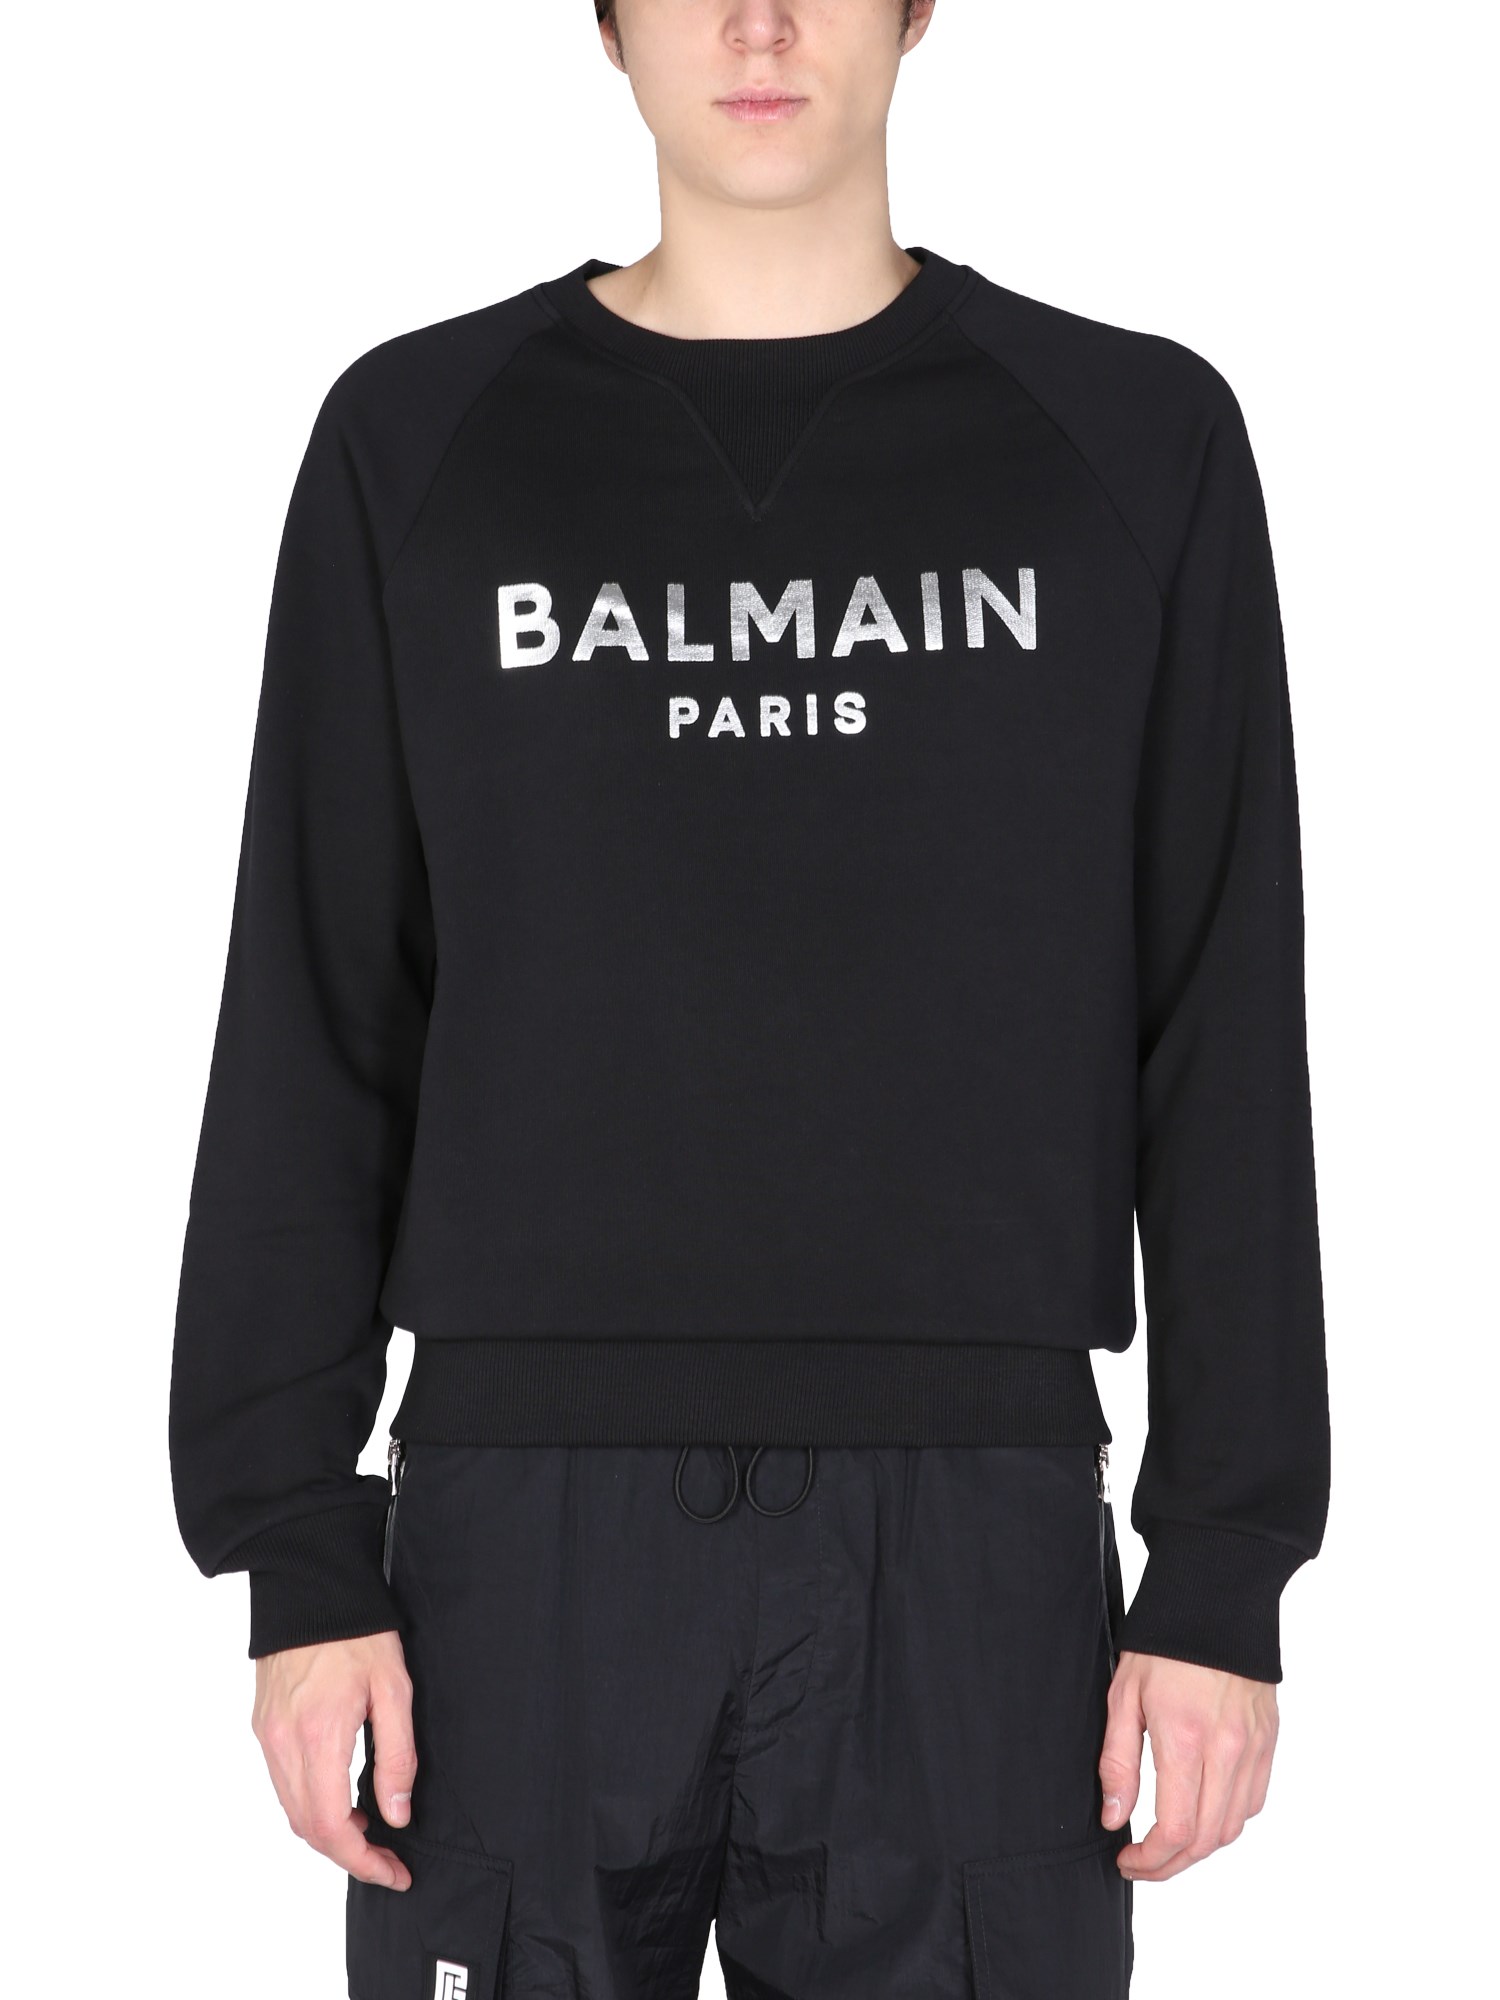 balmain sweatshirt with laminated logo